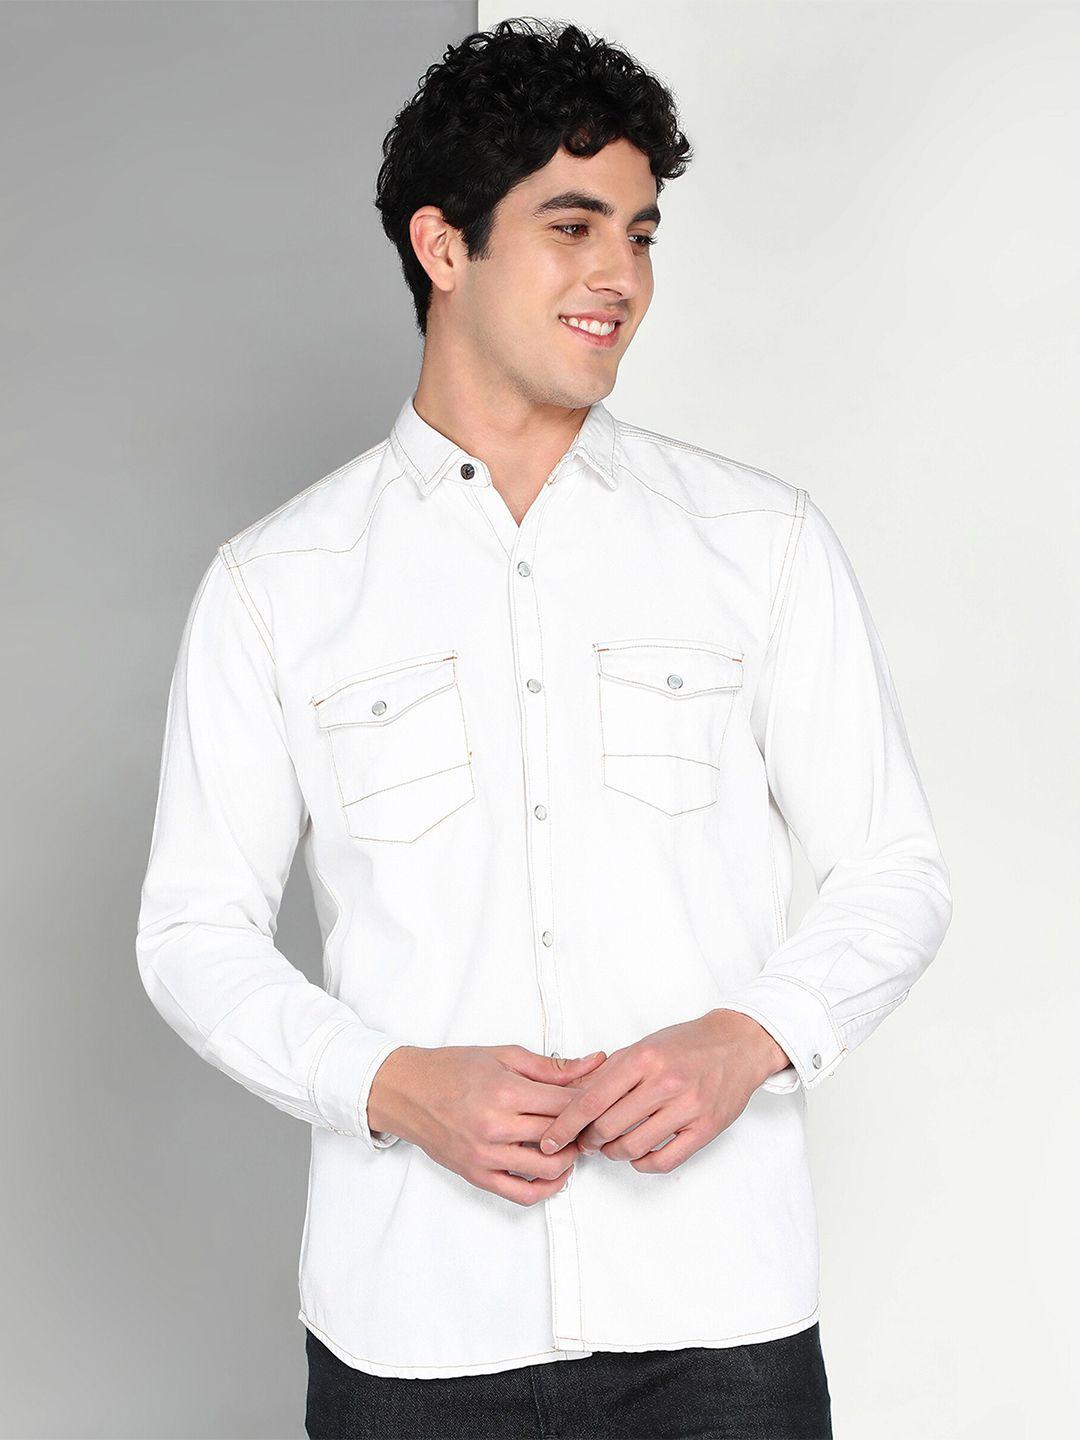 kuons-avenue-men-smart-slim-fit-opaque-casual-shirt